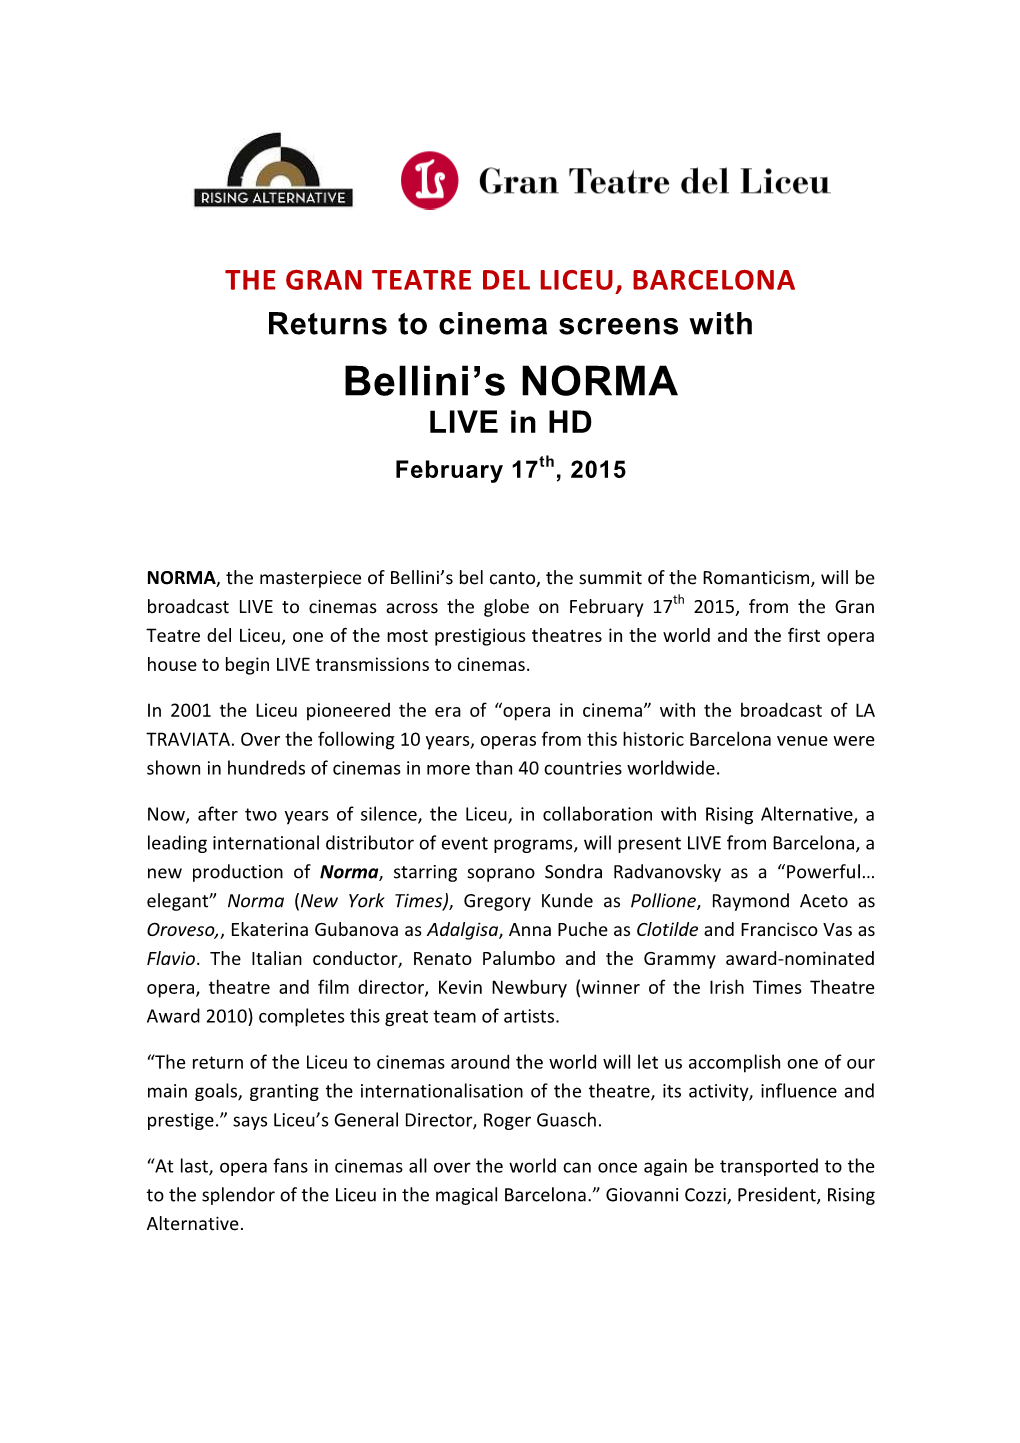 NORMA LICEU Press Release